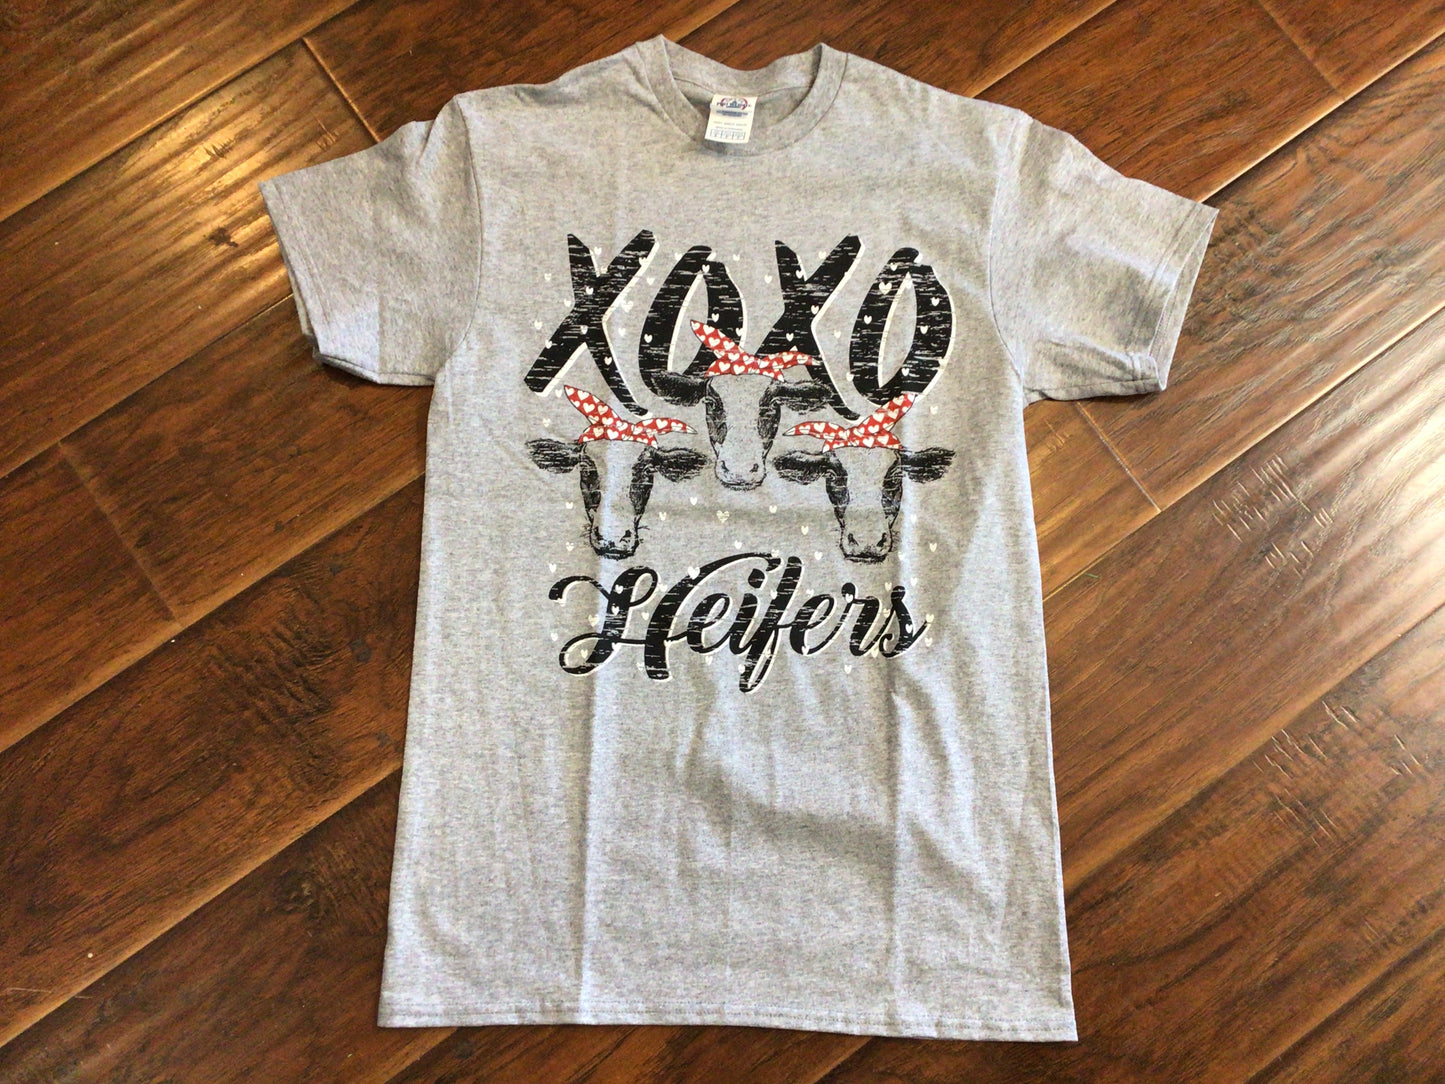 XOXO Heifers T-Shirt